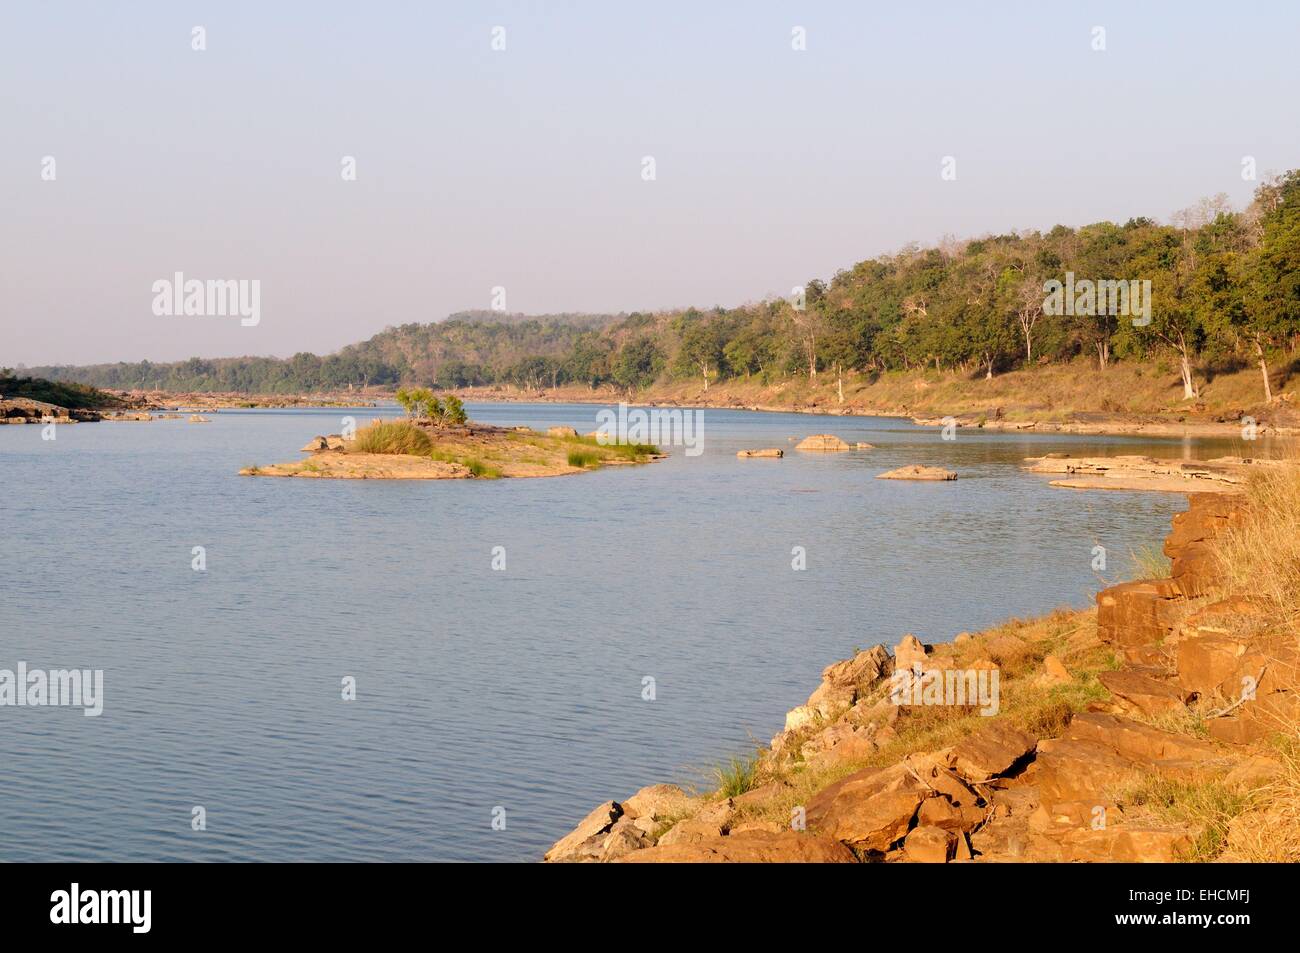 The ken River running through Panna National Park Chhatarpur Madhya Pradesh India Stock Photo